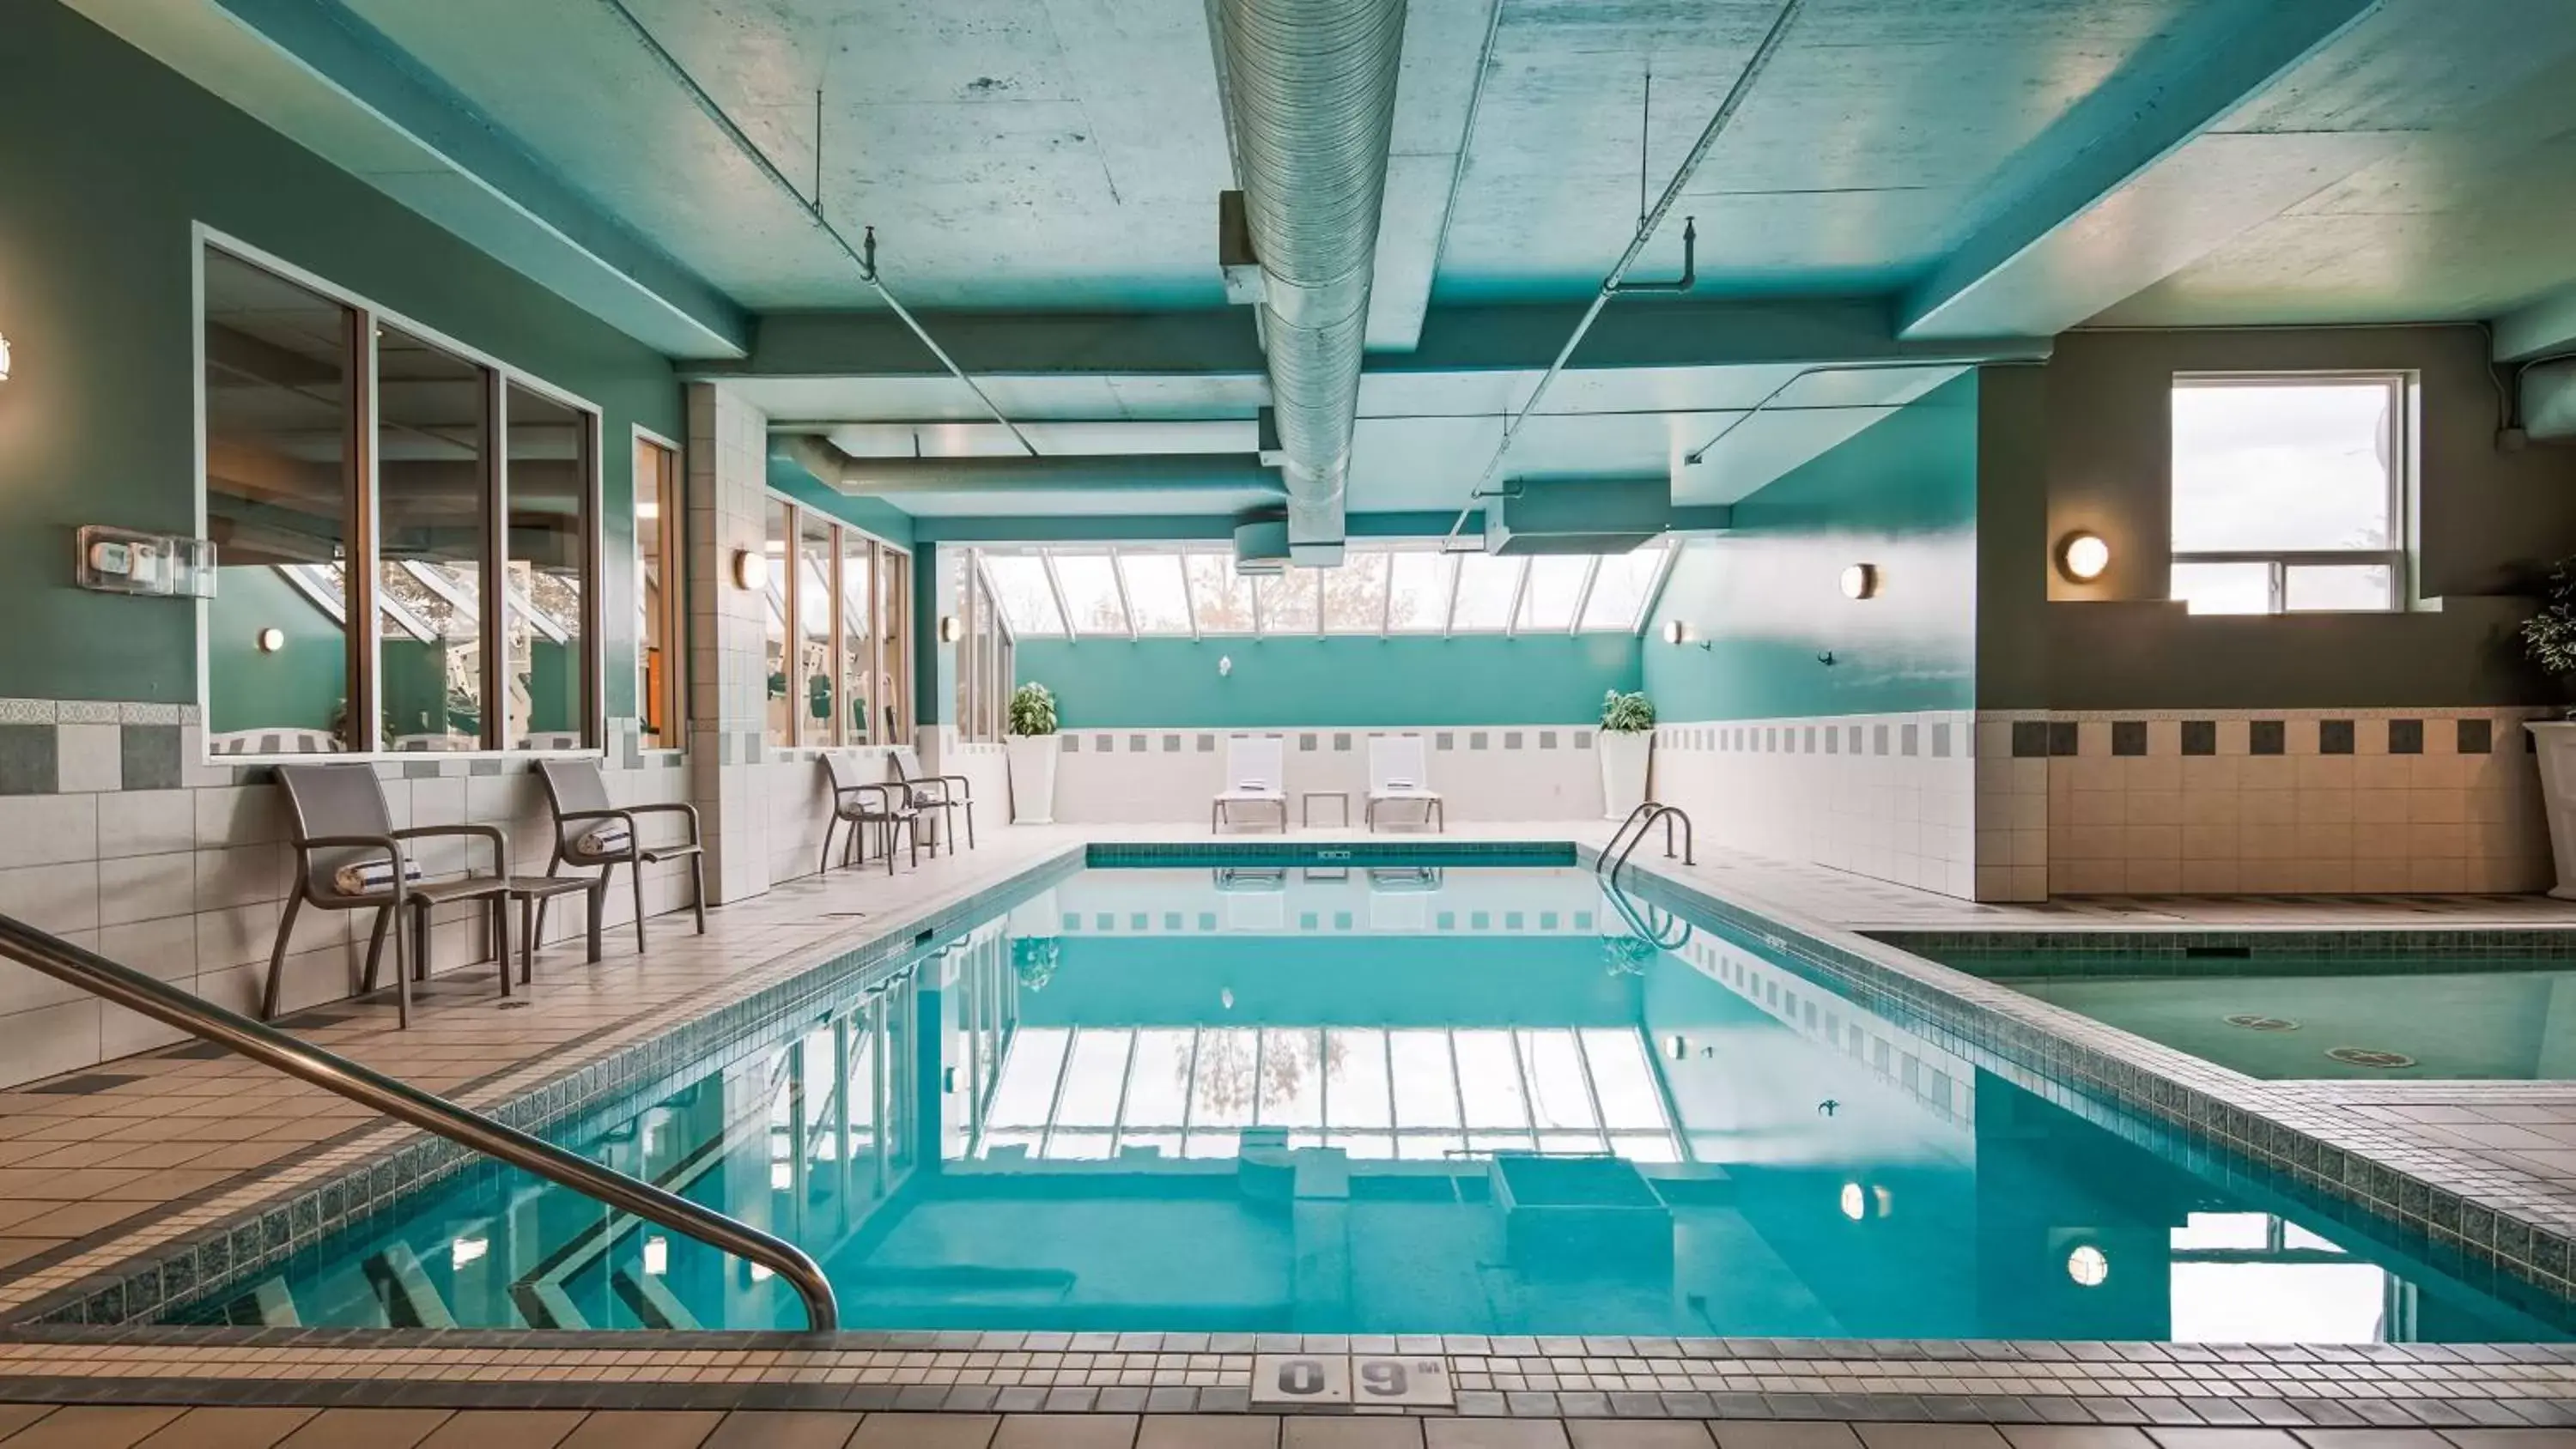 On site, Swimming Pool in Best Western PLUS Calgary Centre Inn